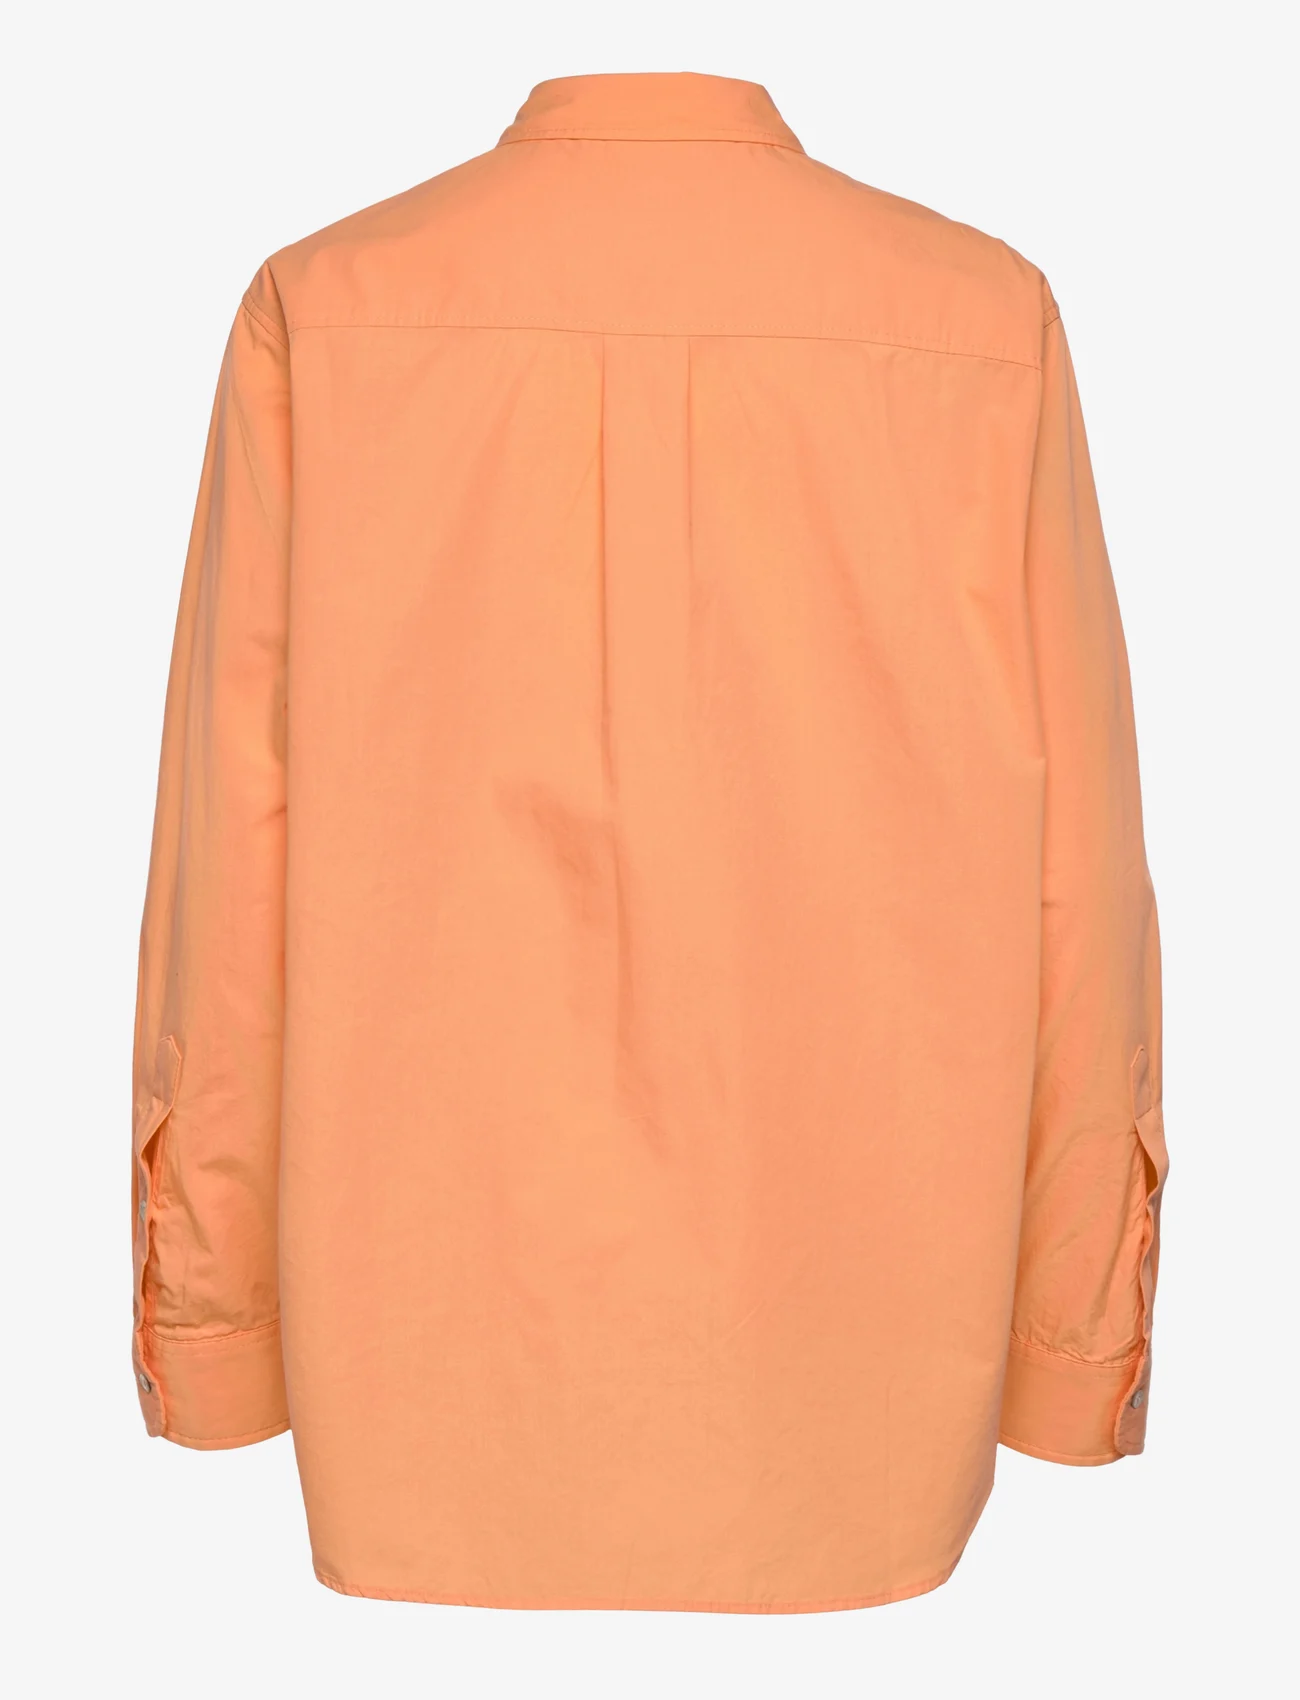 H2O Fagerholt - Afternoon Shirt - long-sleeved shirts - peach - 1